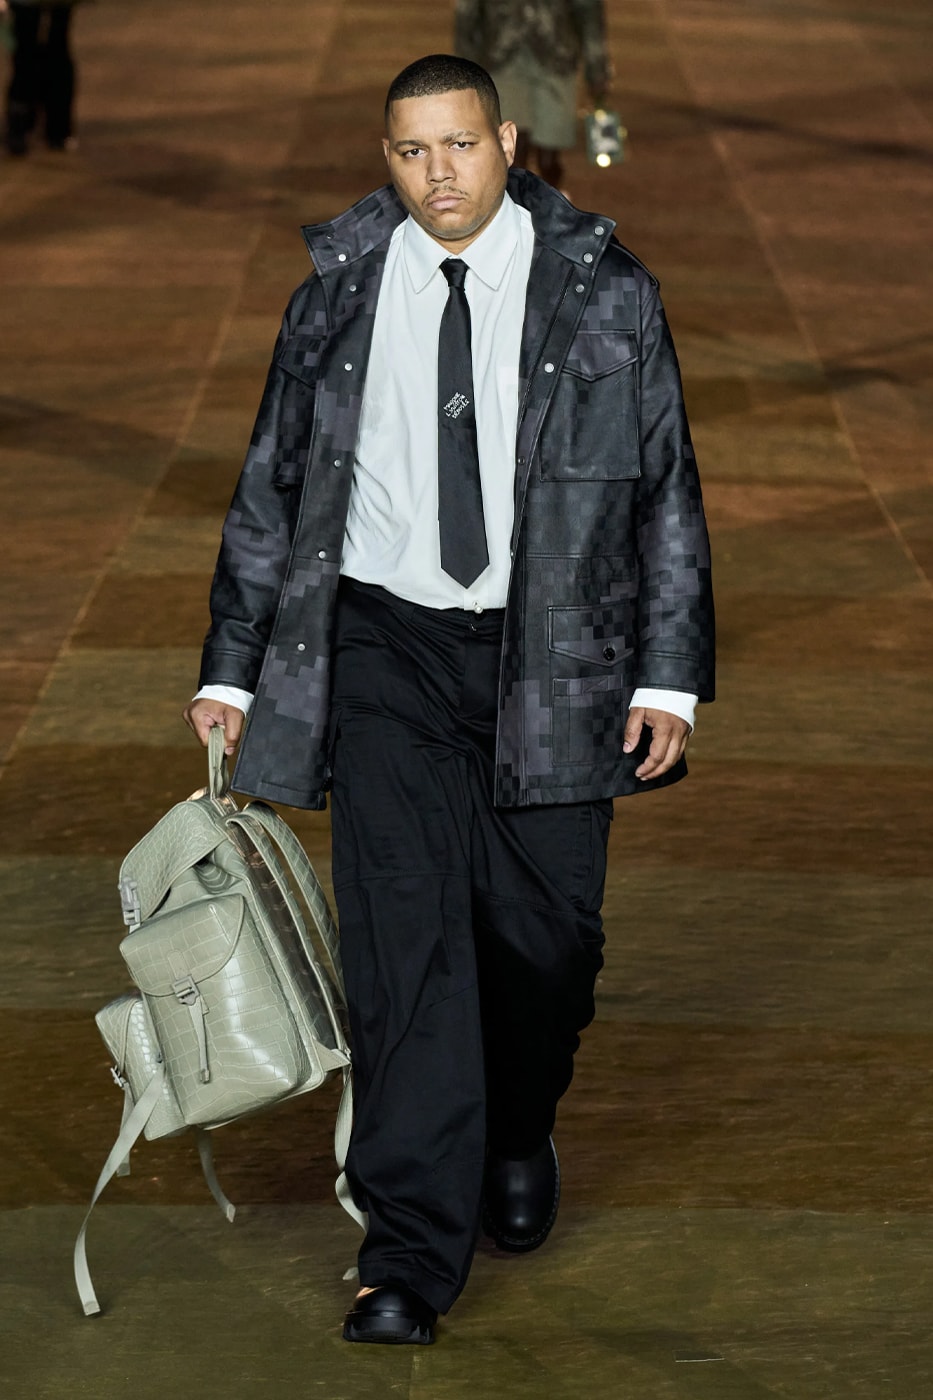 louis vuitton belt men - Google Search  Mens bags fashion, Louis vuitton  duffle bag, Mens accessories fashion